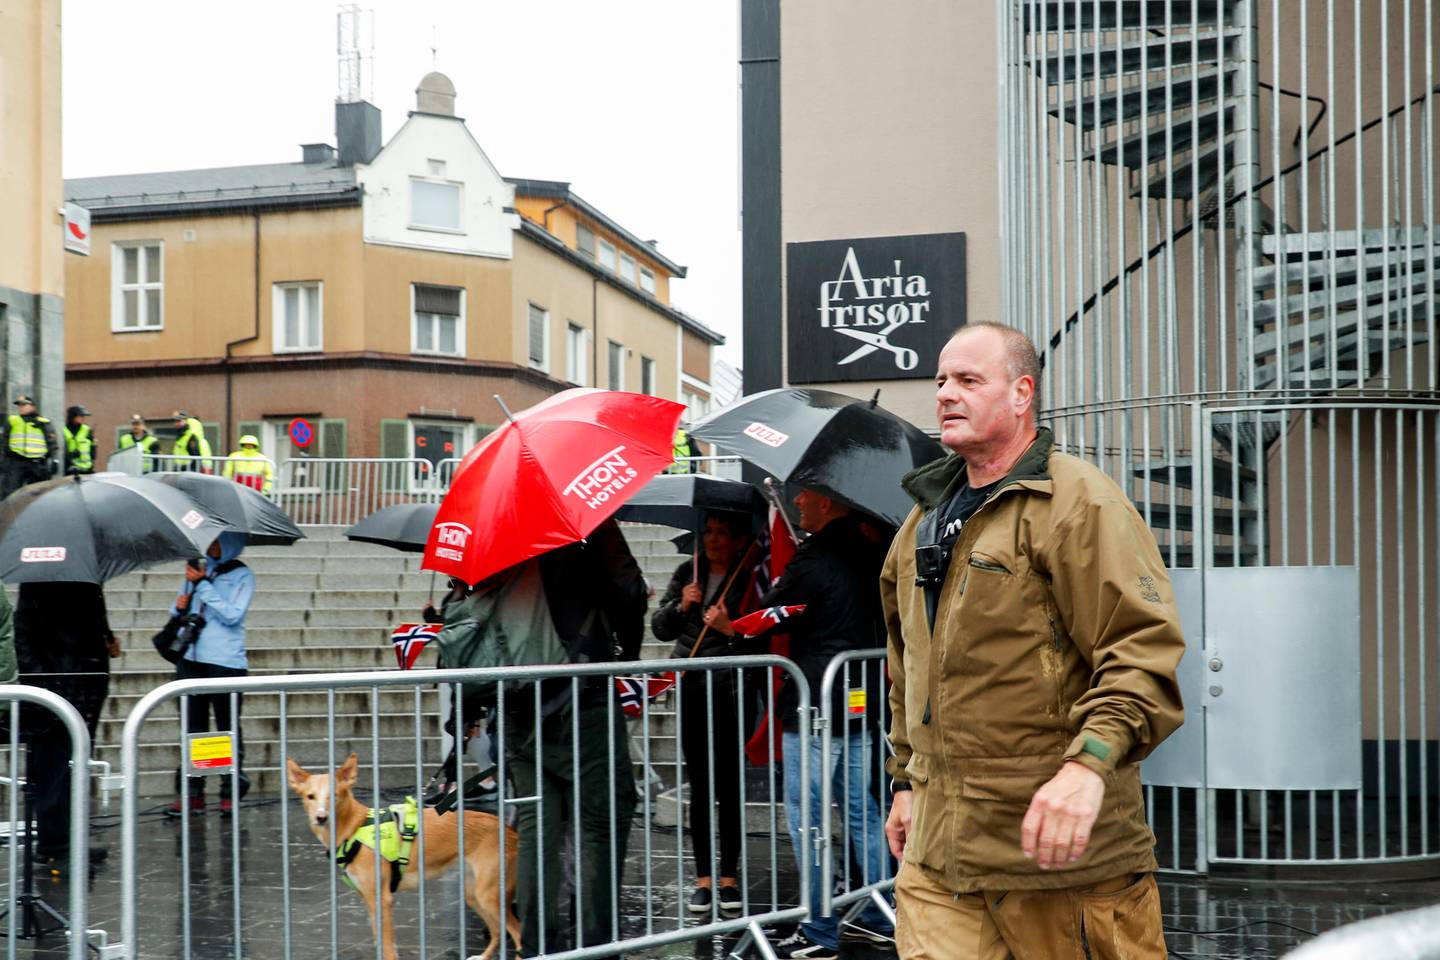 Hamar  20200912. 
Sian-leder Lars Thorsen under en SIAN markering i sentrum av Hamar.
Foto: Geir Olsen / NTB scanpix